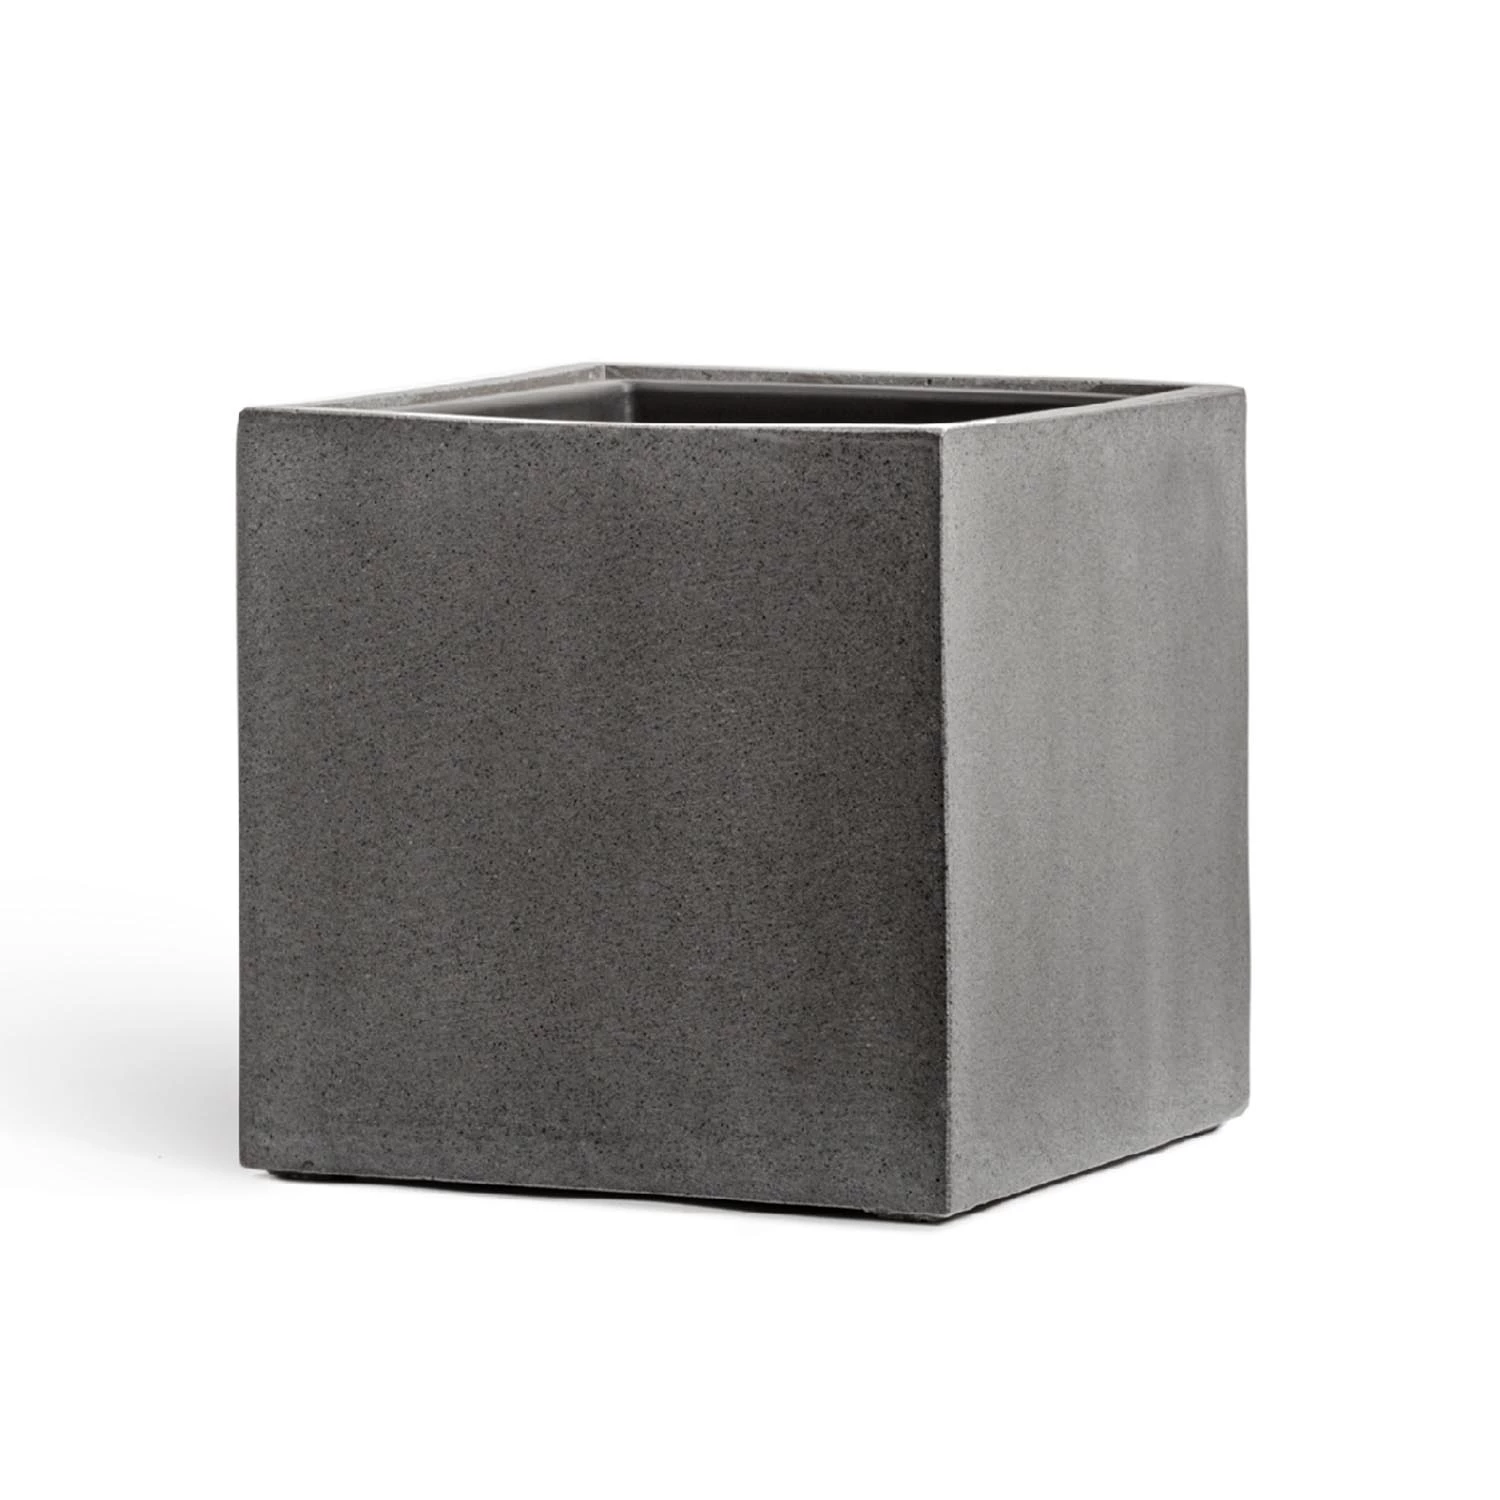 Кашпо TREEZ Effectory Beton - Куб, Тёмно-серый бетон